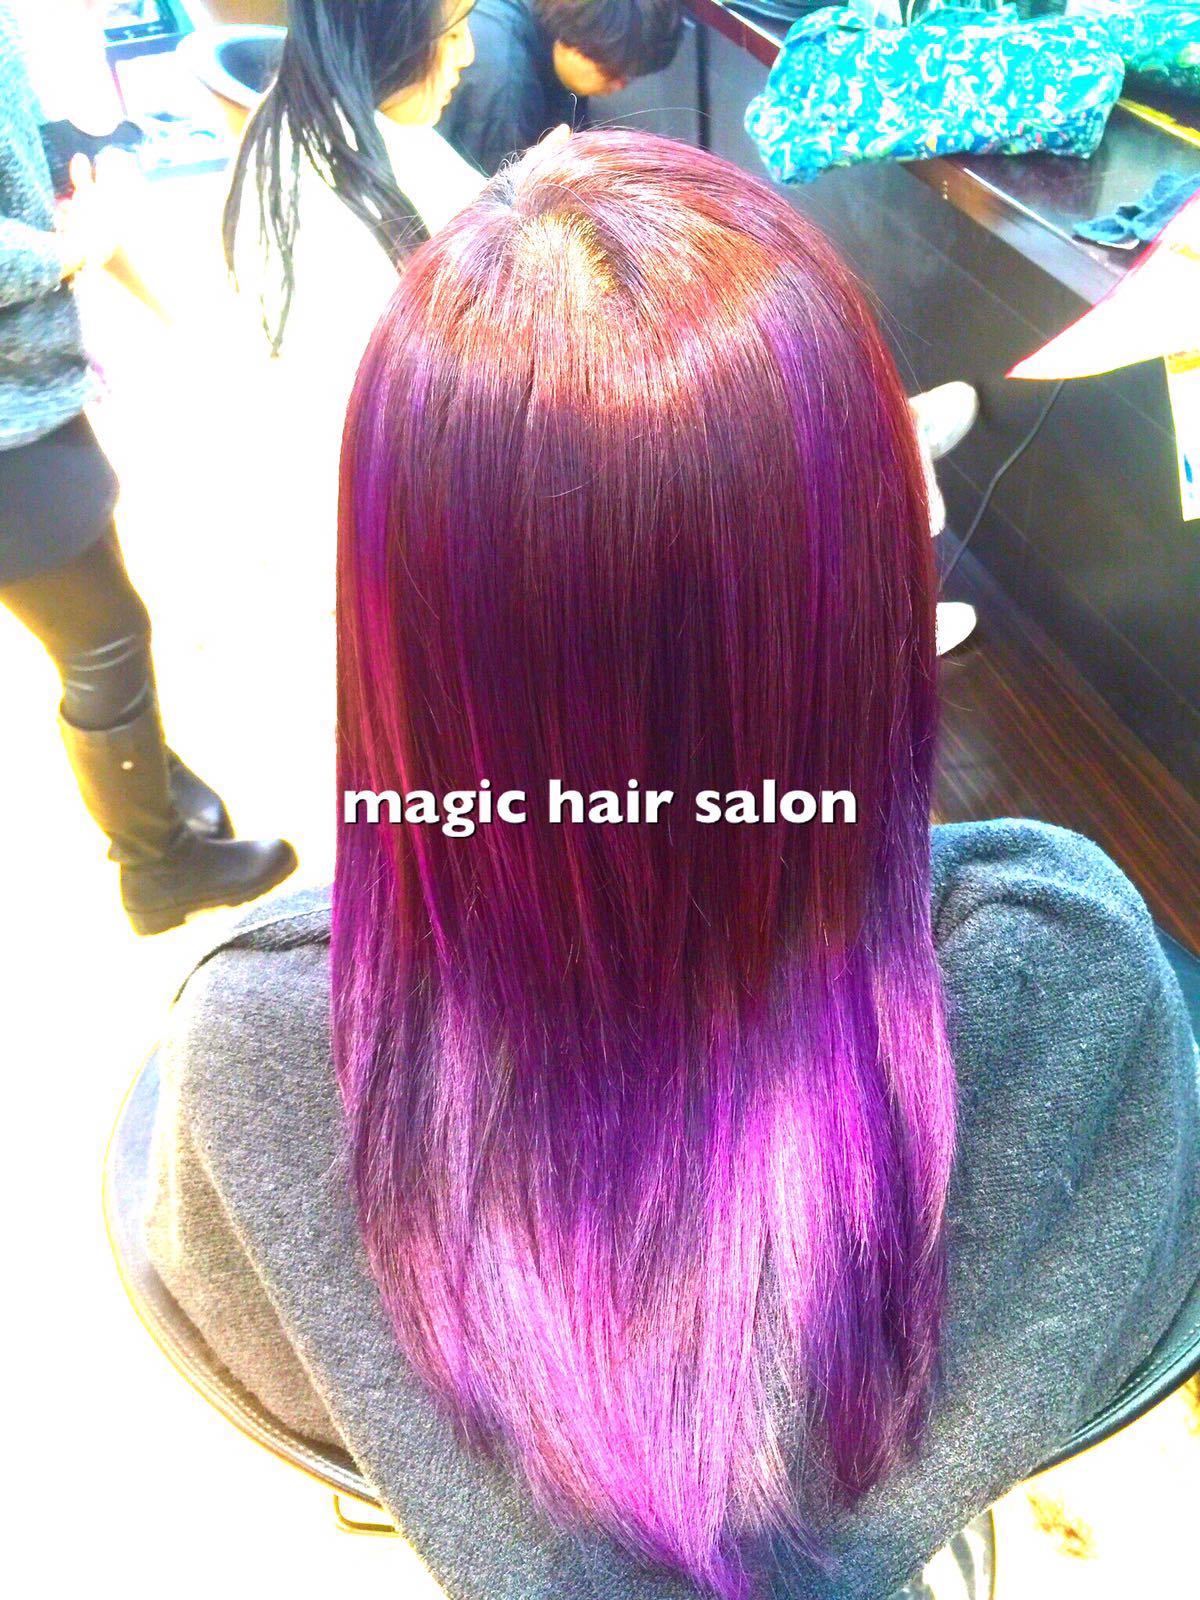 http://www.magic-hairsalon.com/files/IMG-20160409-WA0035.jpg